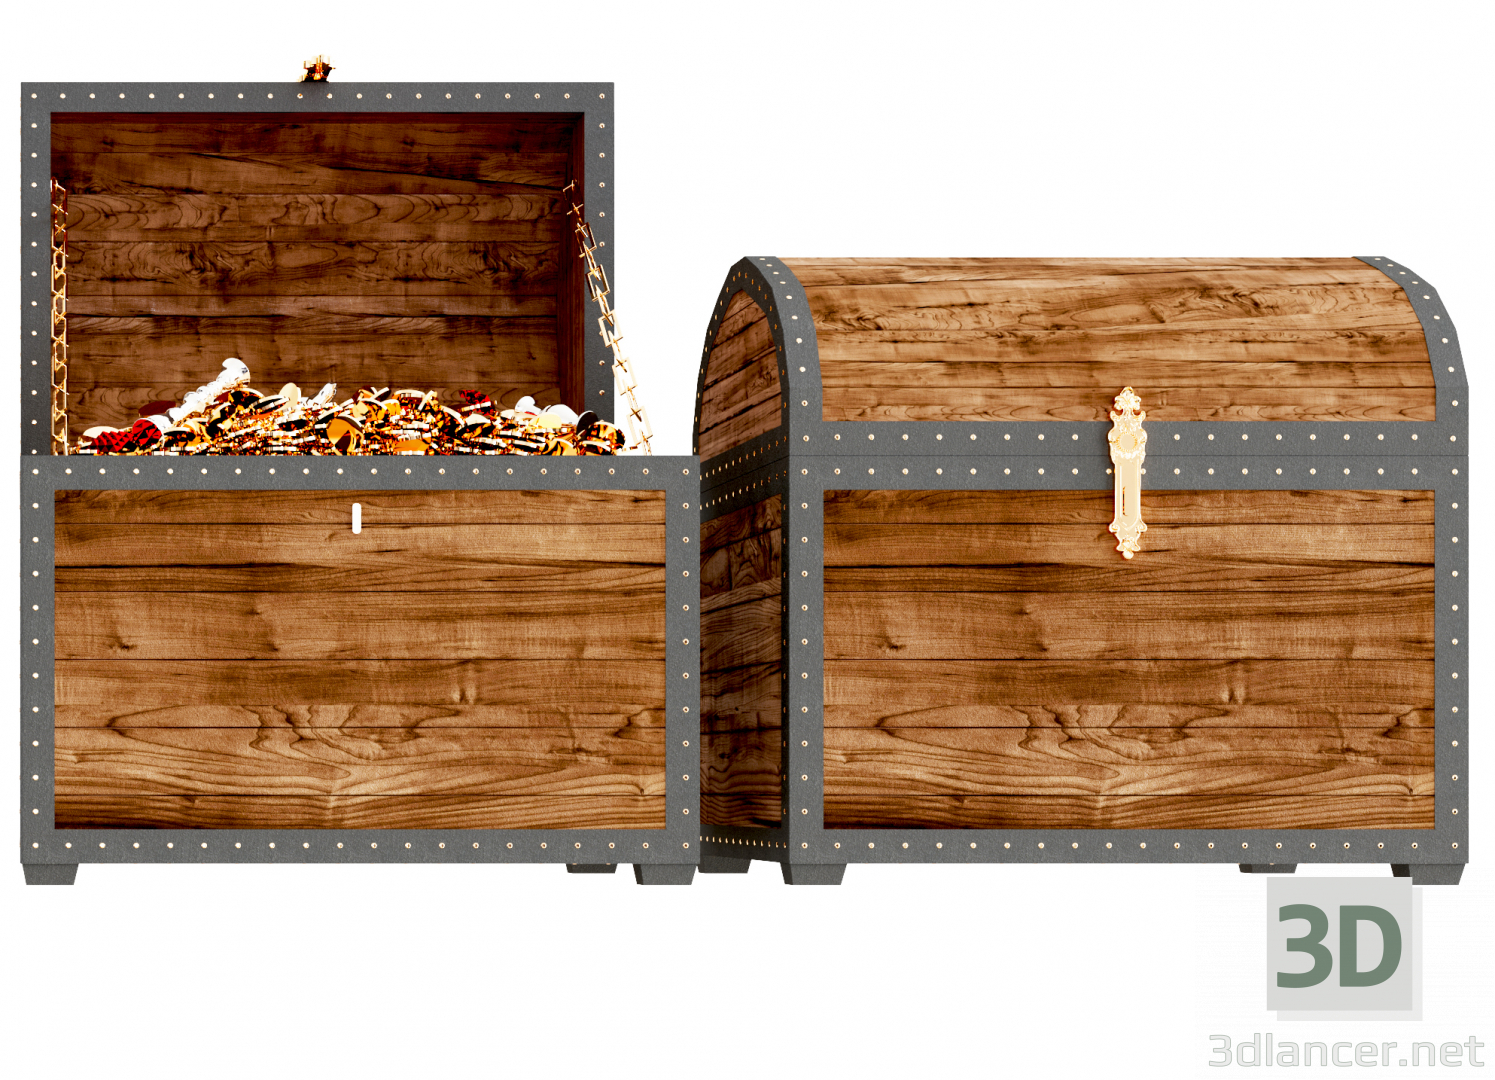 3d Treasure chests model buy - render